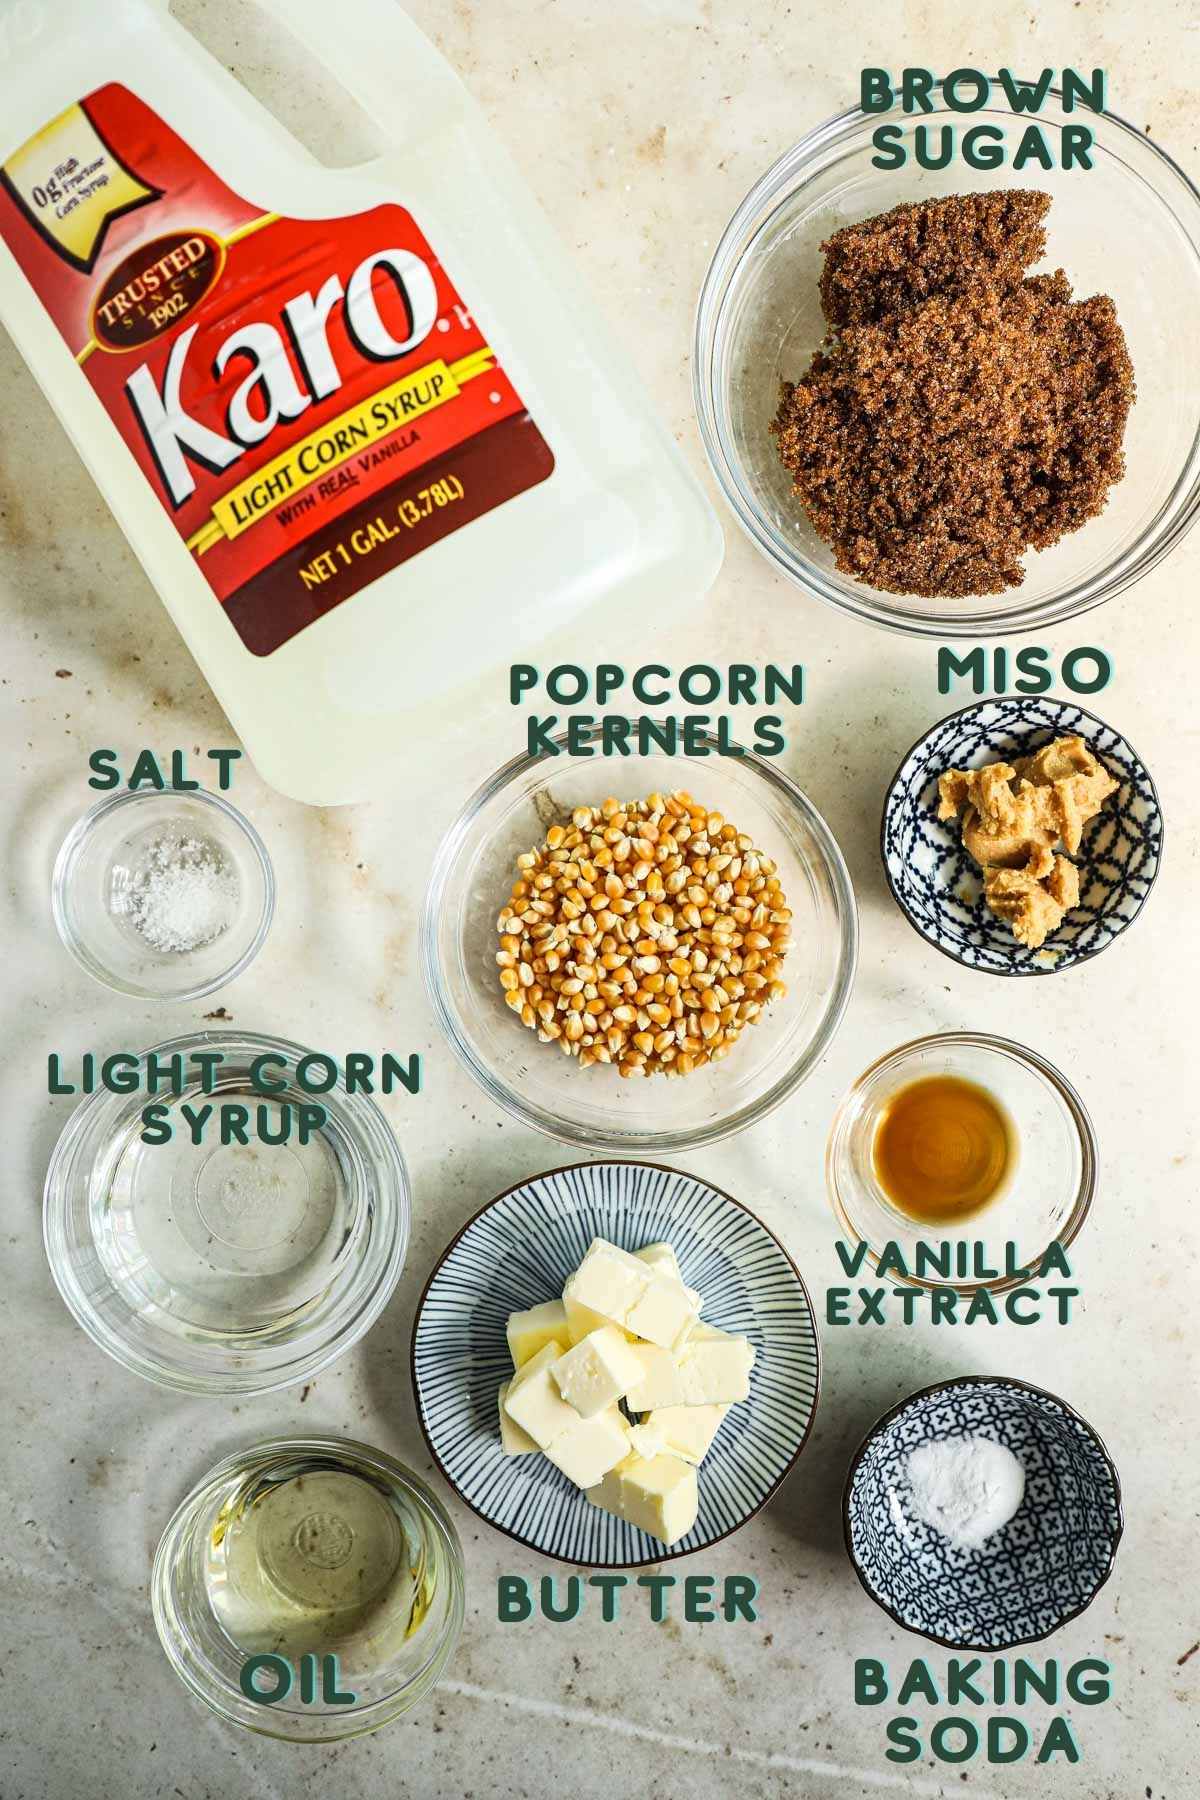 Ingredients to make miso caramel corn, including popcorn kerbels, miso, brown sugar, Karo light corn syrup, salt, butter, vanilla extract, baking soda, miso paste.